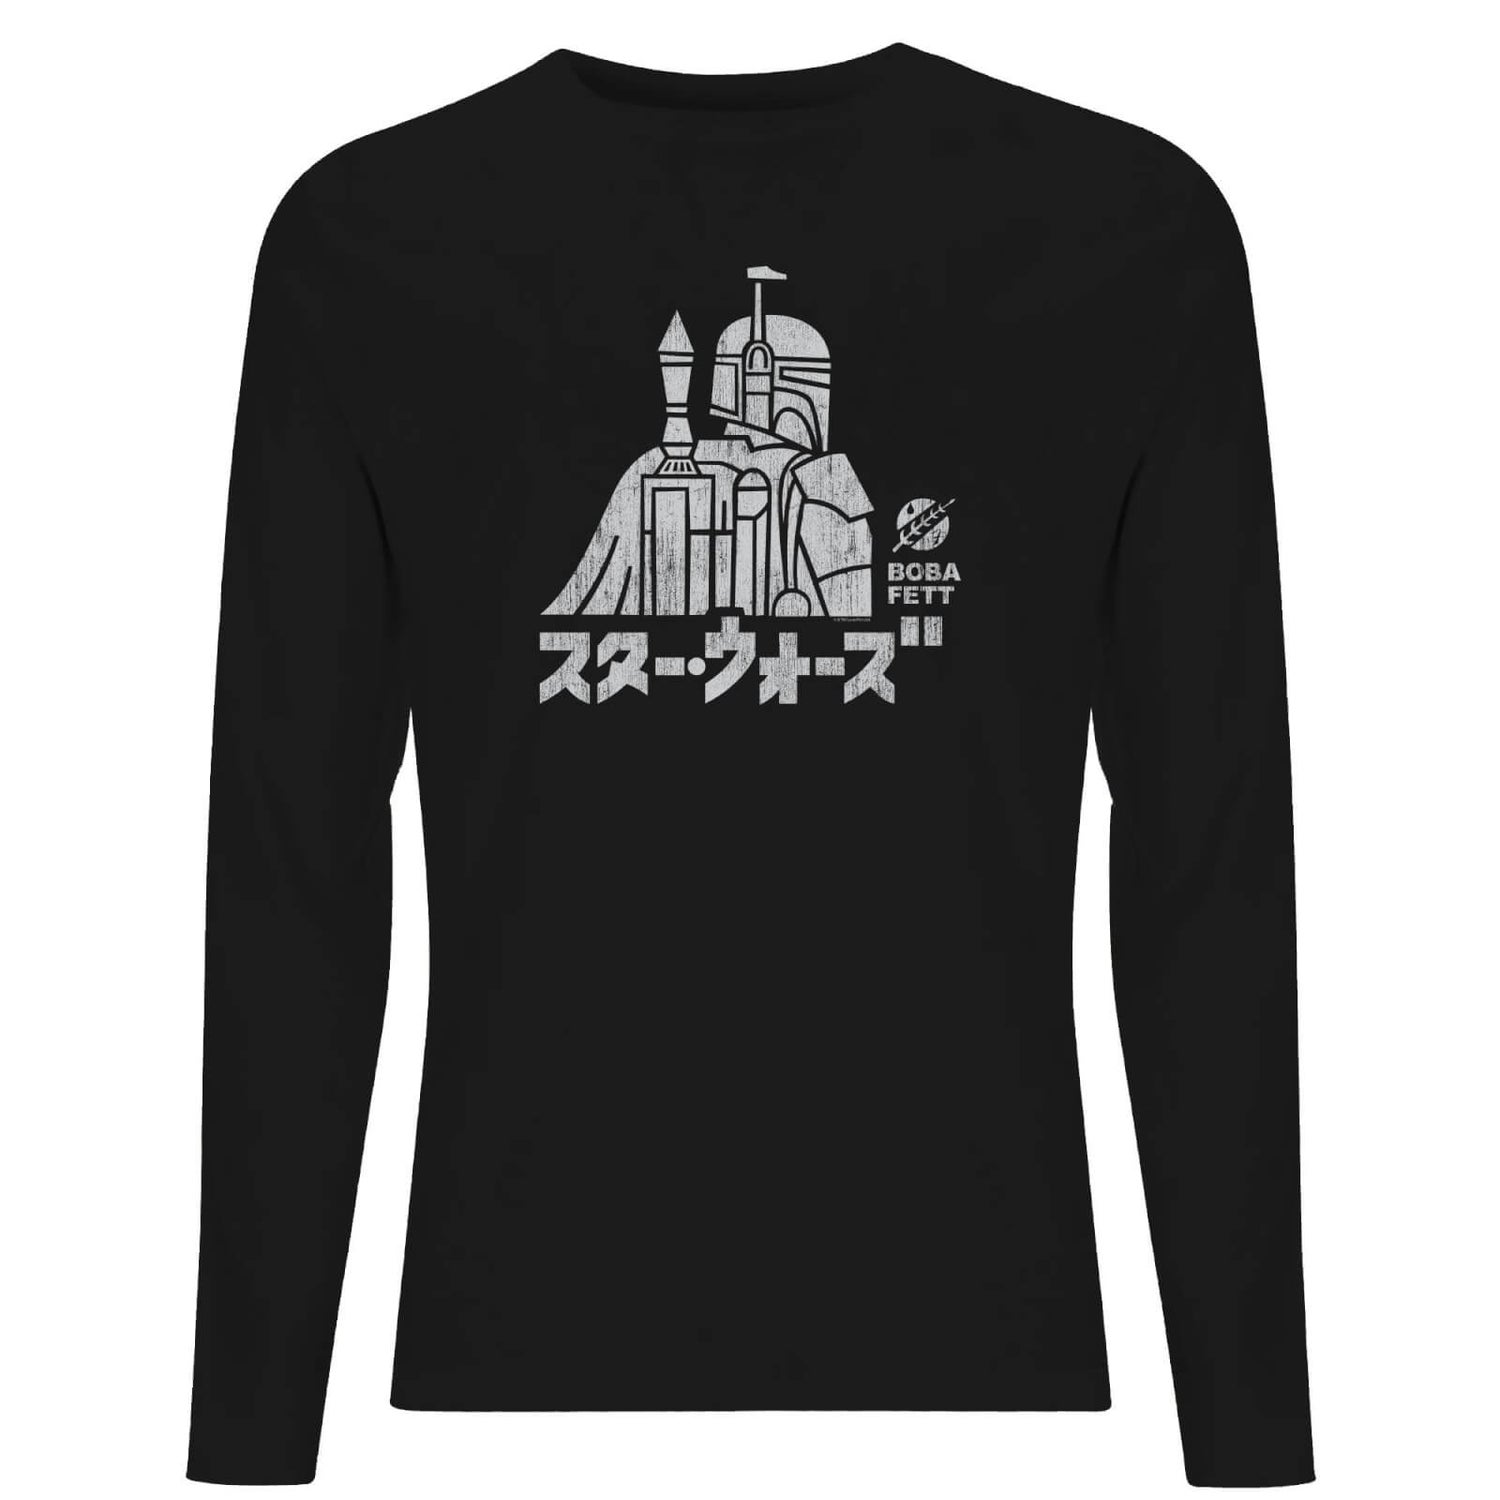 Star Wars Kana Boba Fett Men's Long Sleeve T-Shirt - Black